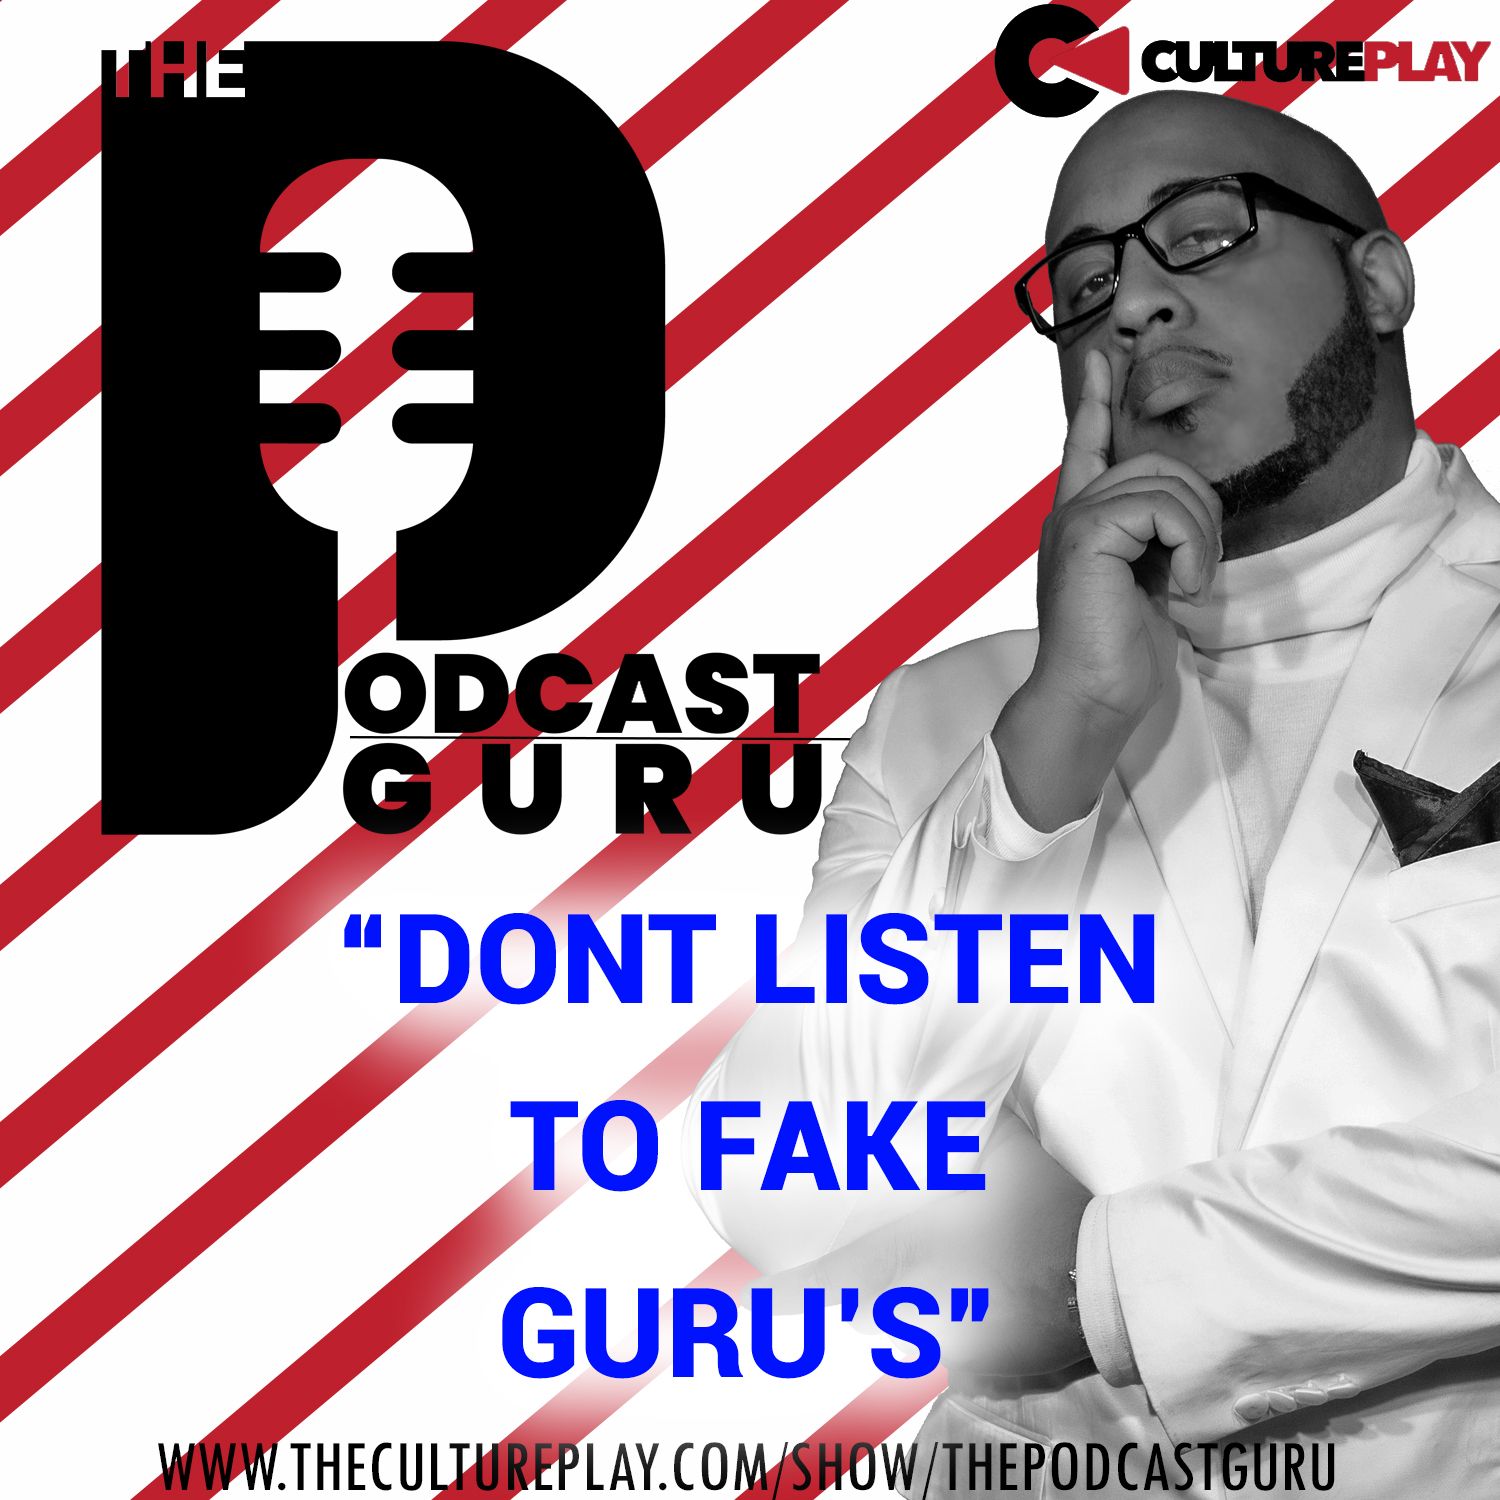 Podcast Guru - Don't Listen To Fake Guru's